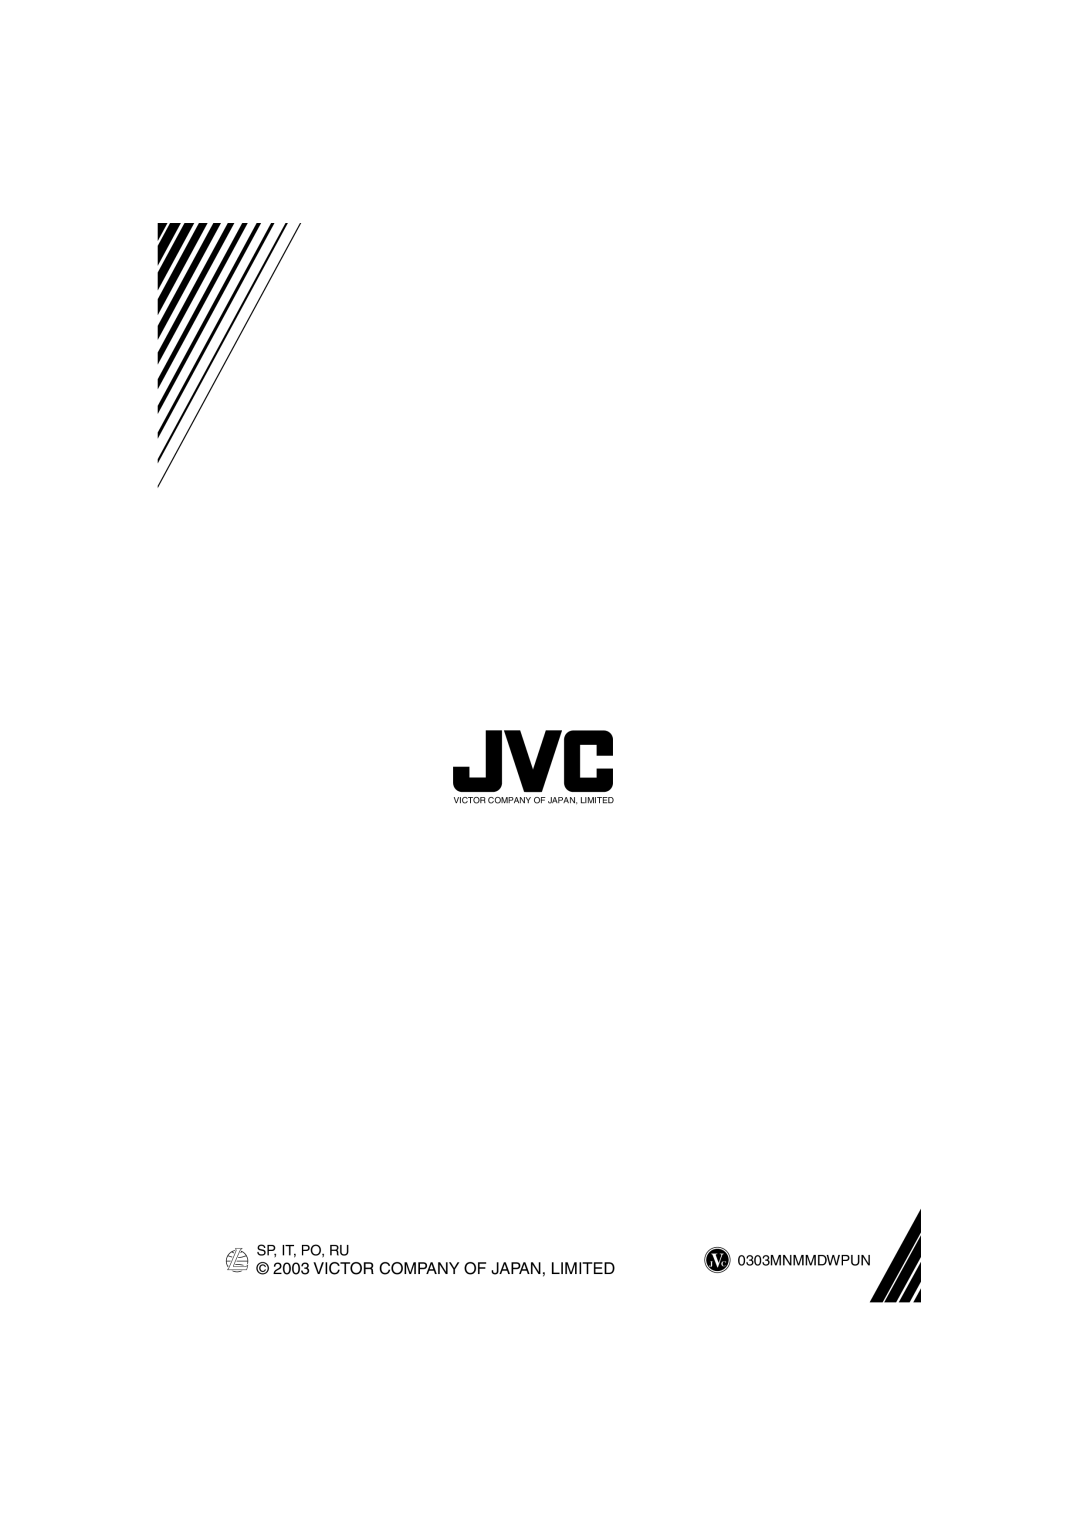 JVC KV-MH6500 manual Victor Company Of Japan, Limited, Sp, It, Po, Ru, J C 0303MNMMDWPUN 